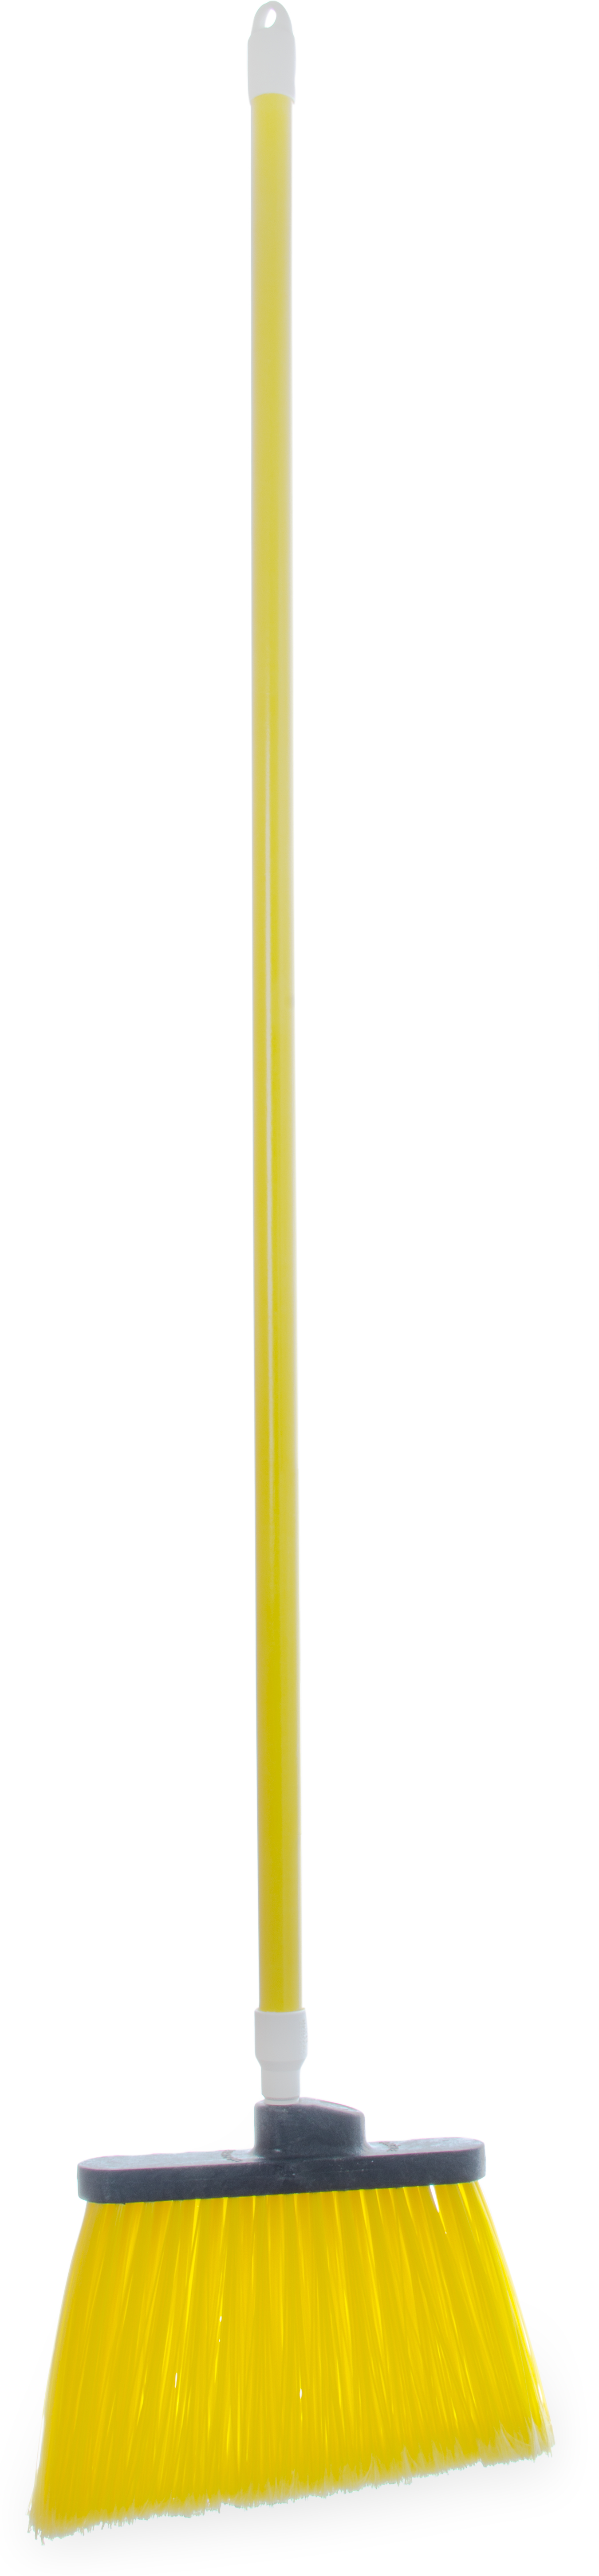 Duo-Sweep Angle Broom Flagged Bristle 56 Long - Yellow